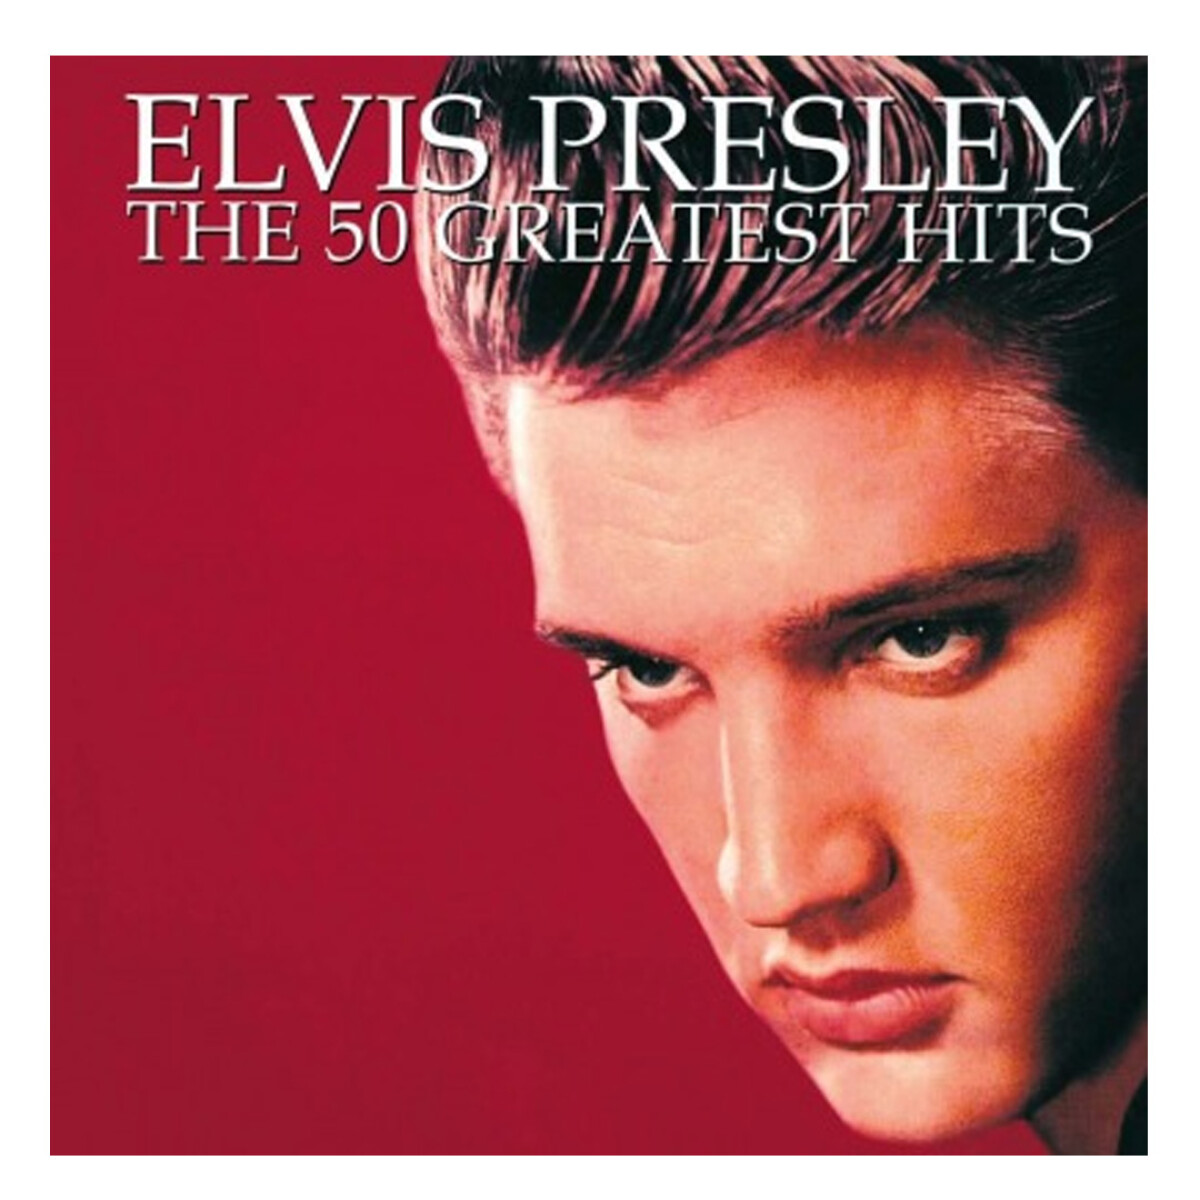 Presley, Elvis - 50 Greatest Hits - Vinilo 